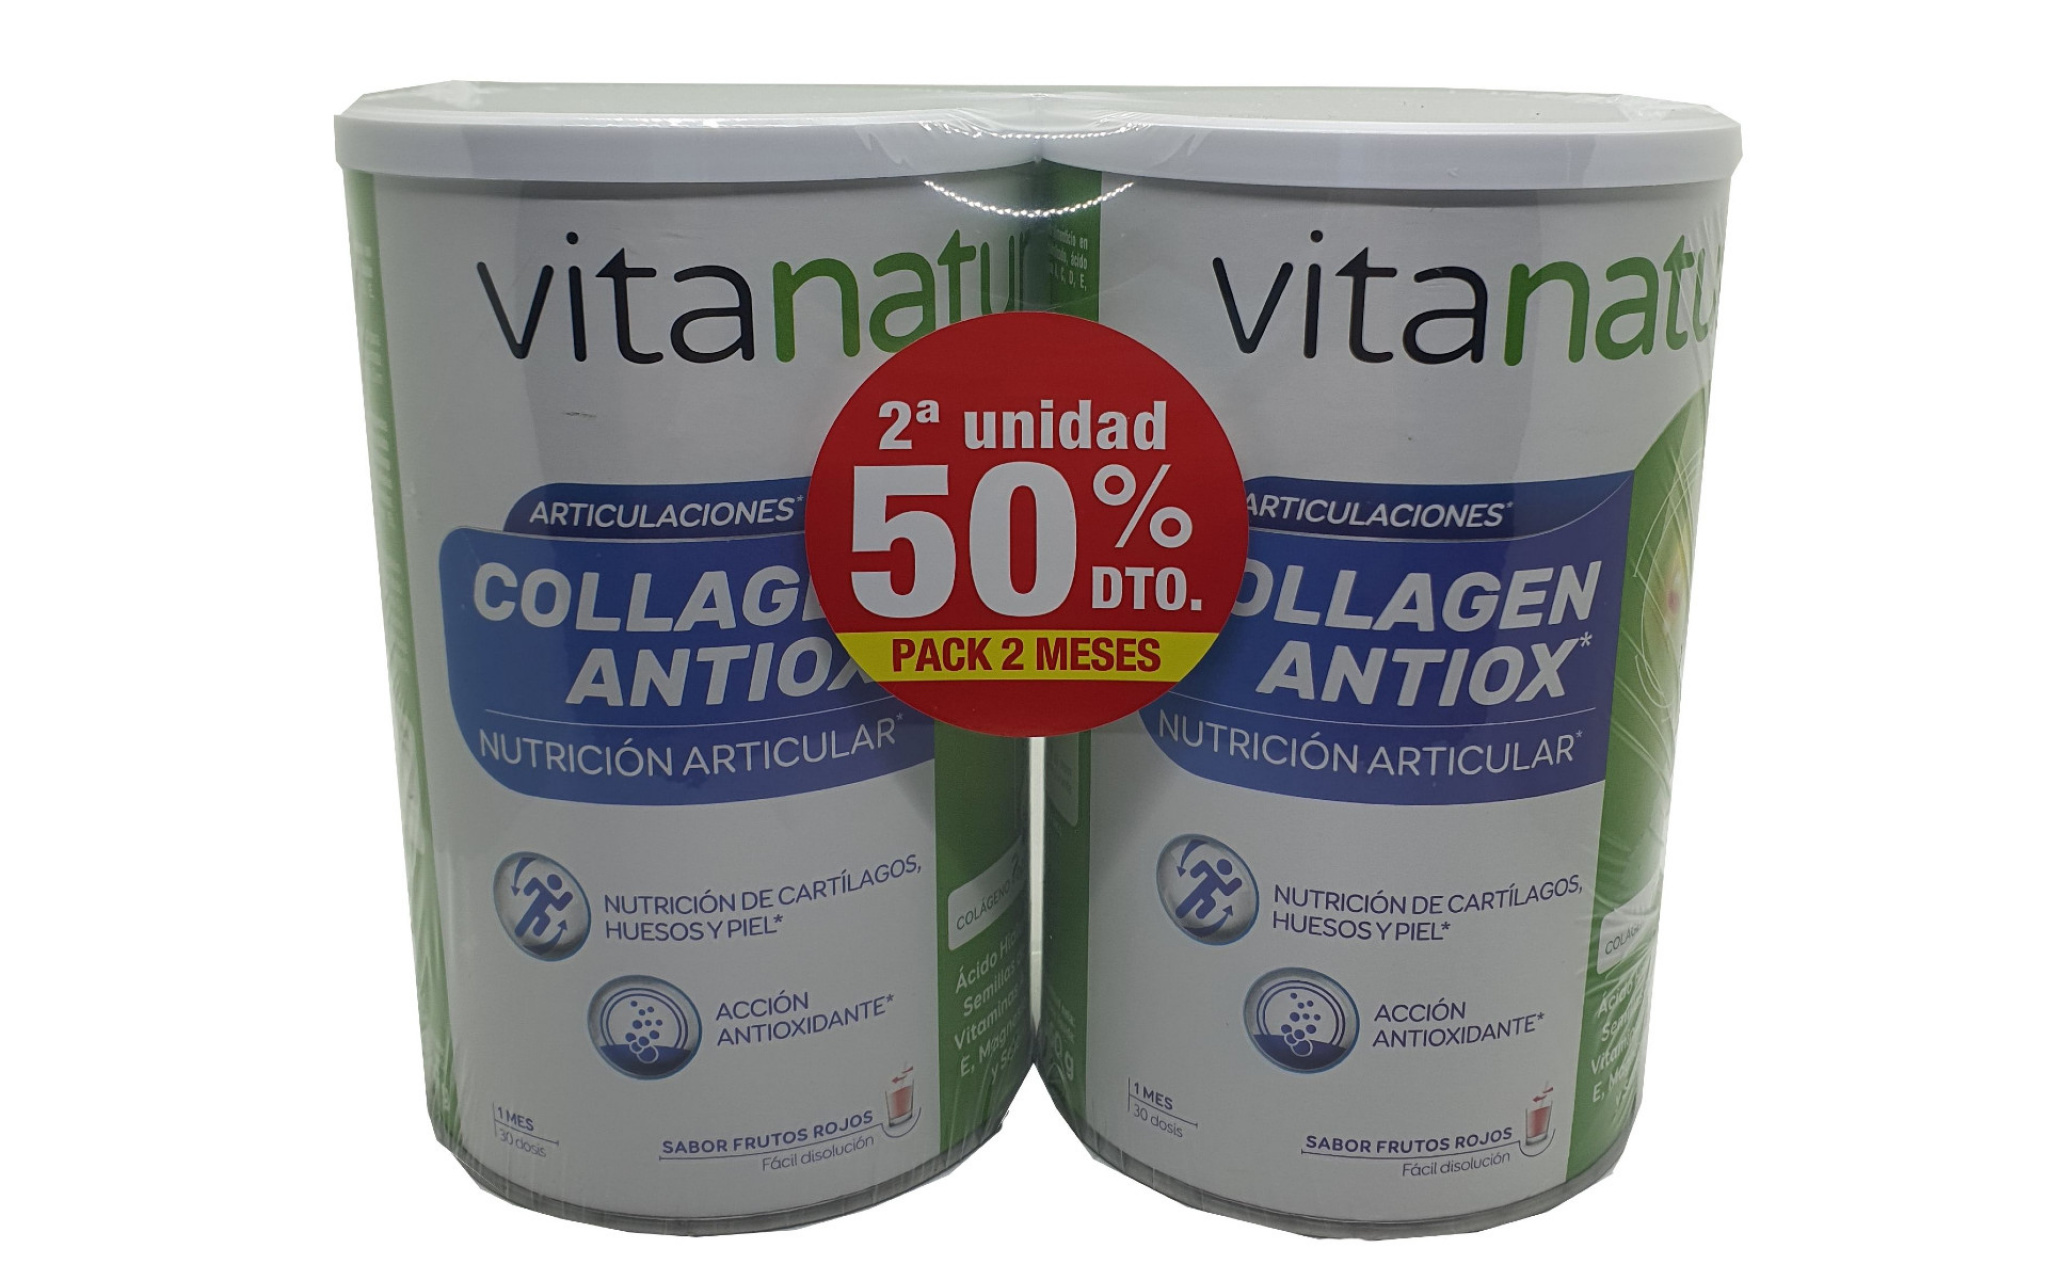 Vitanatur Collagen Antiox Sabor Frutos Rojos Duplo 2x360g